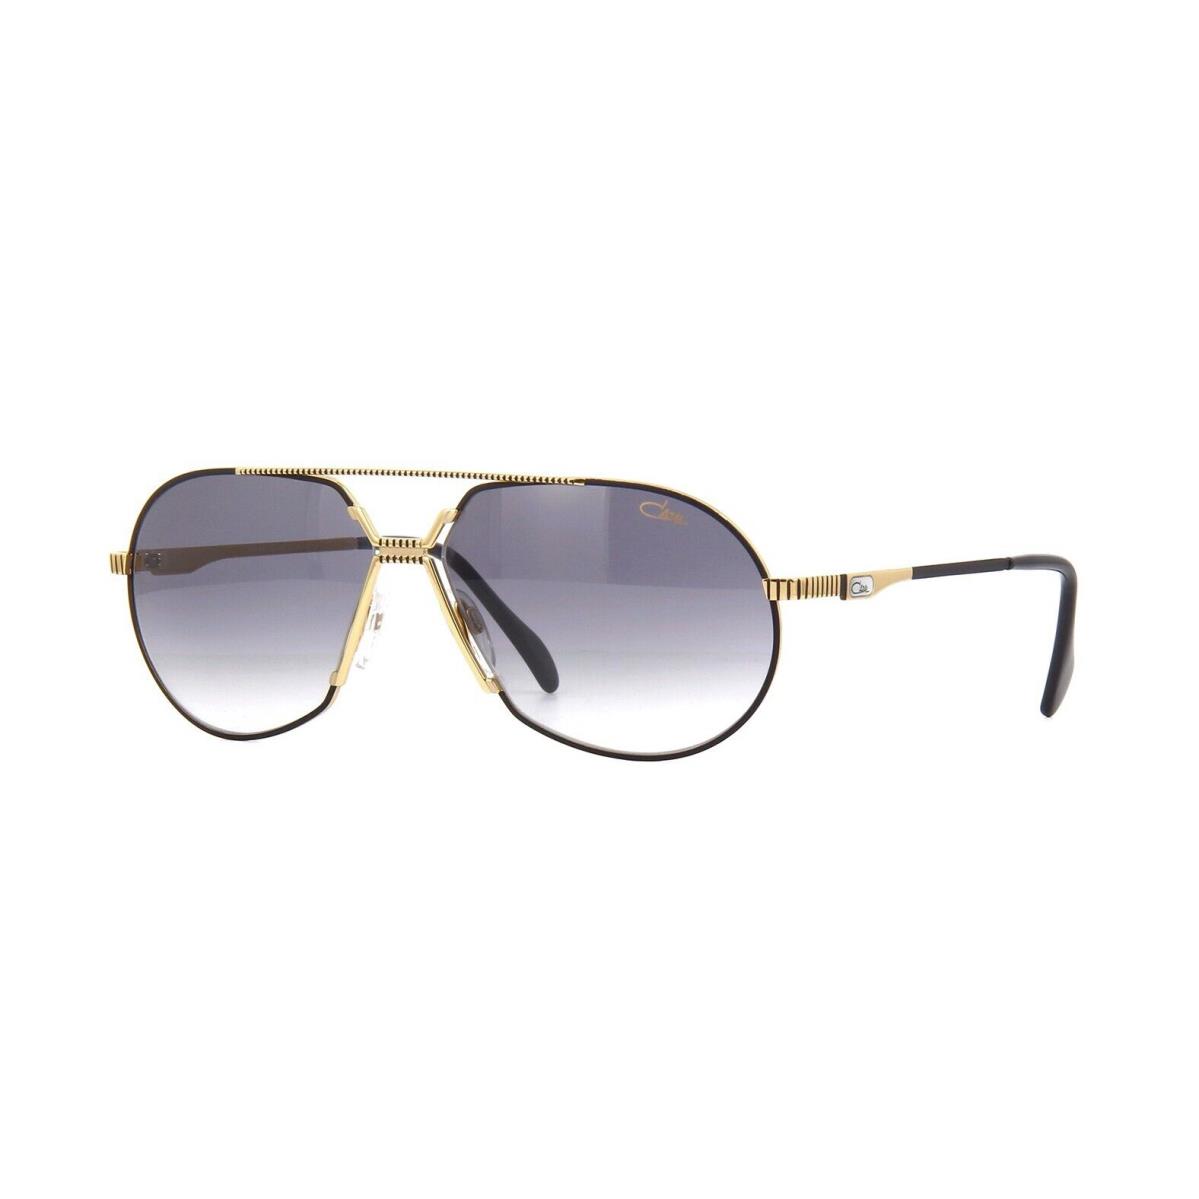 Cazal Legends 968 Black Gold/grey Shaded 001 Sunglasses - Frame: Black Gold, Lens: Grey Shaded